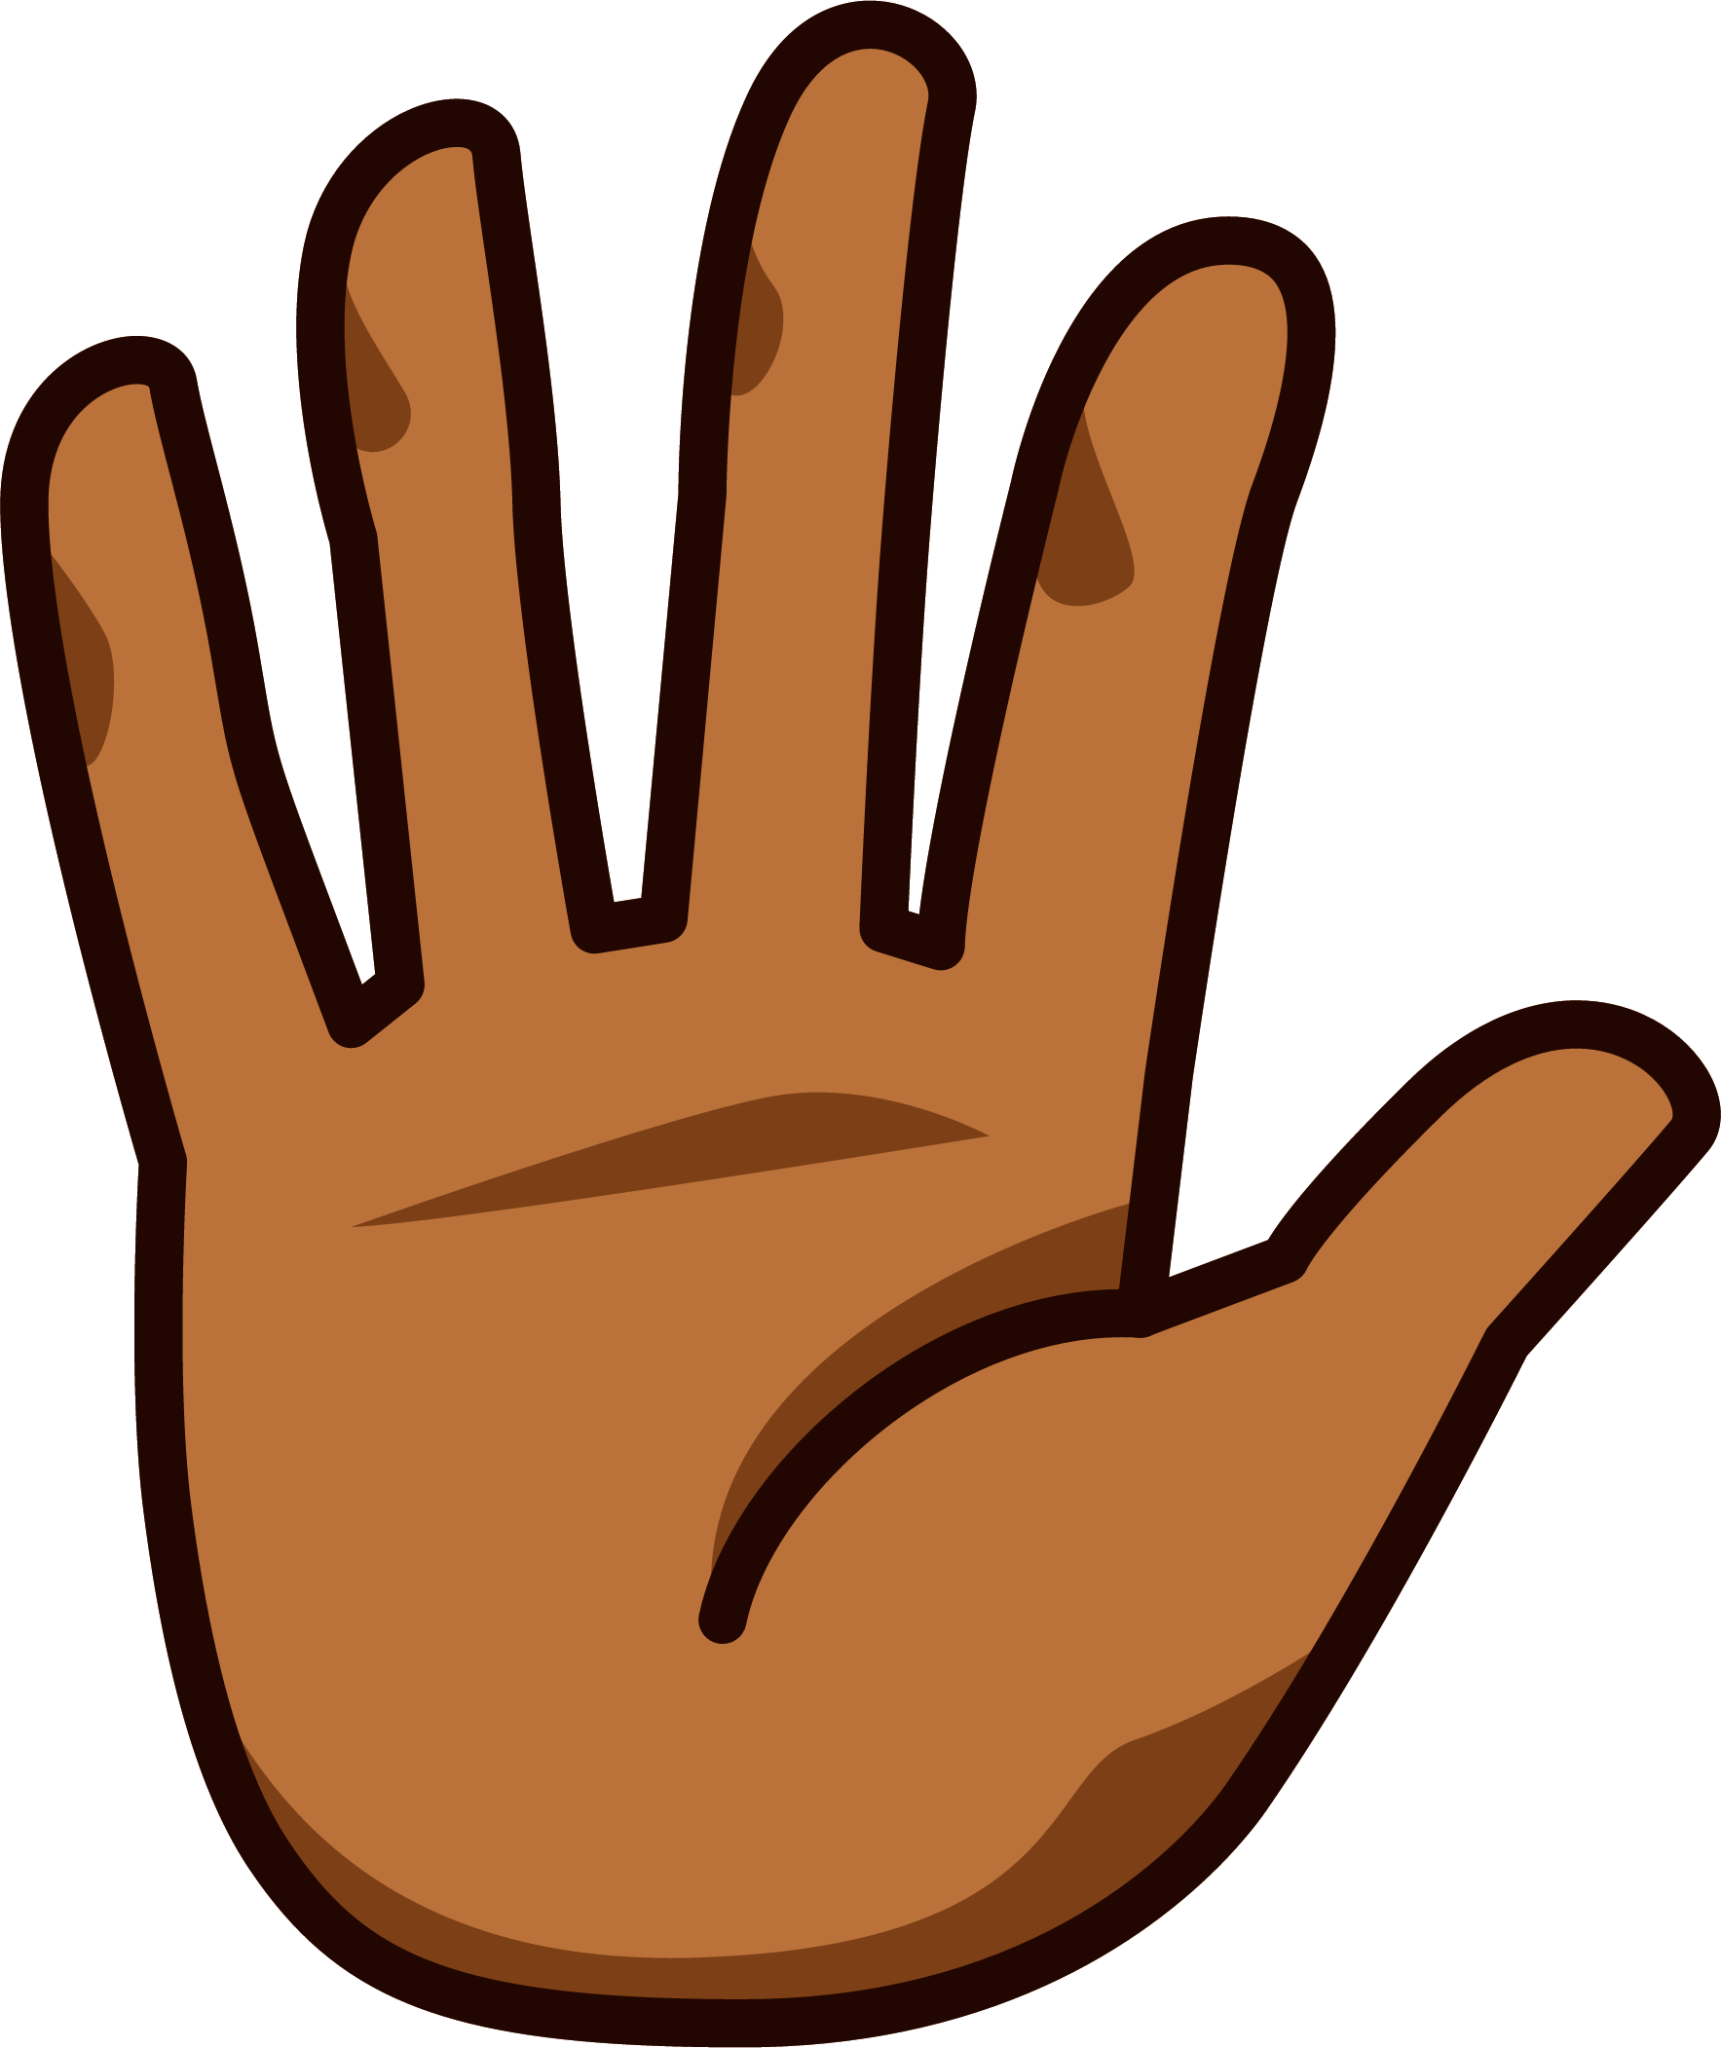 raised hand with fingers splayed (brown) emoji